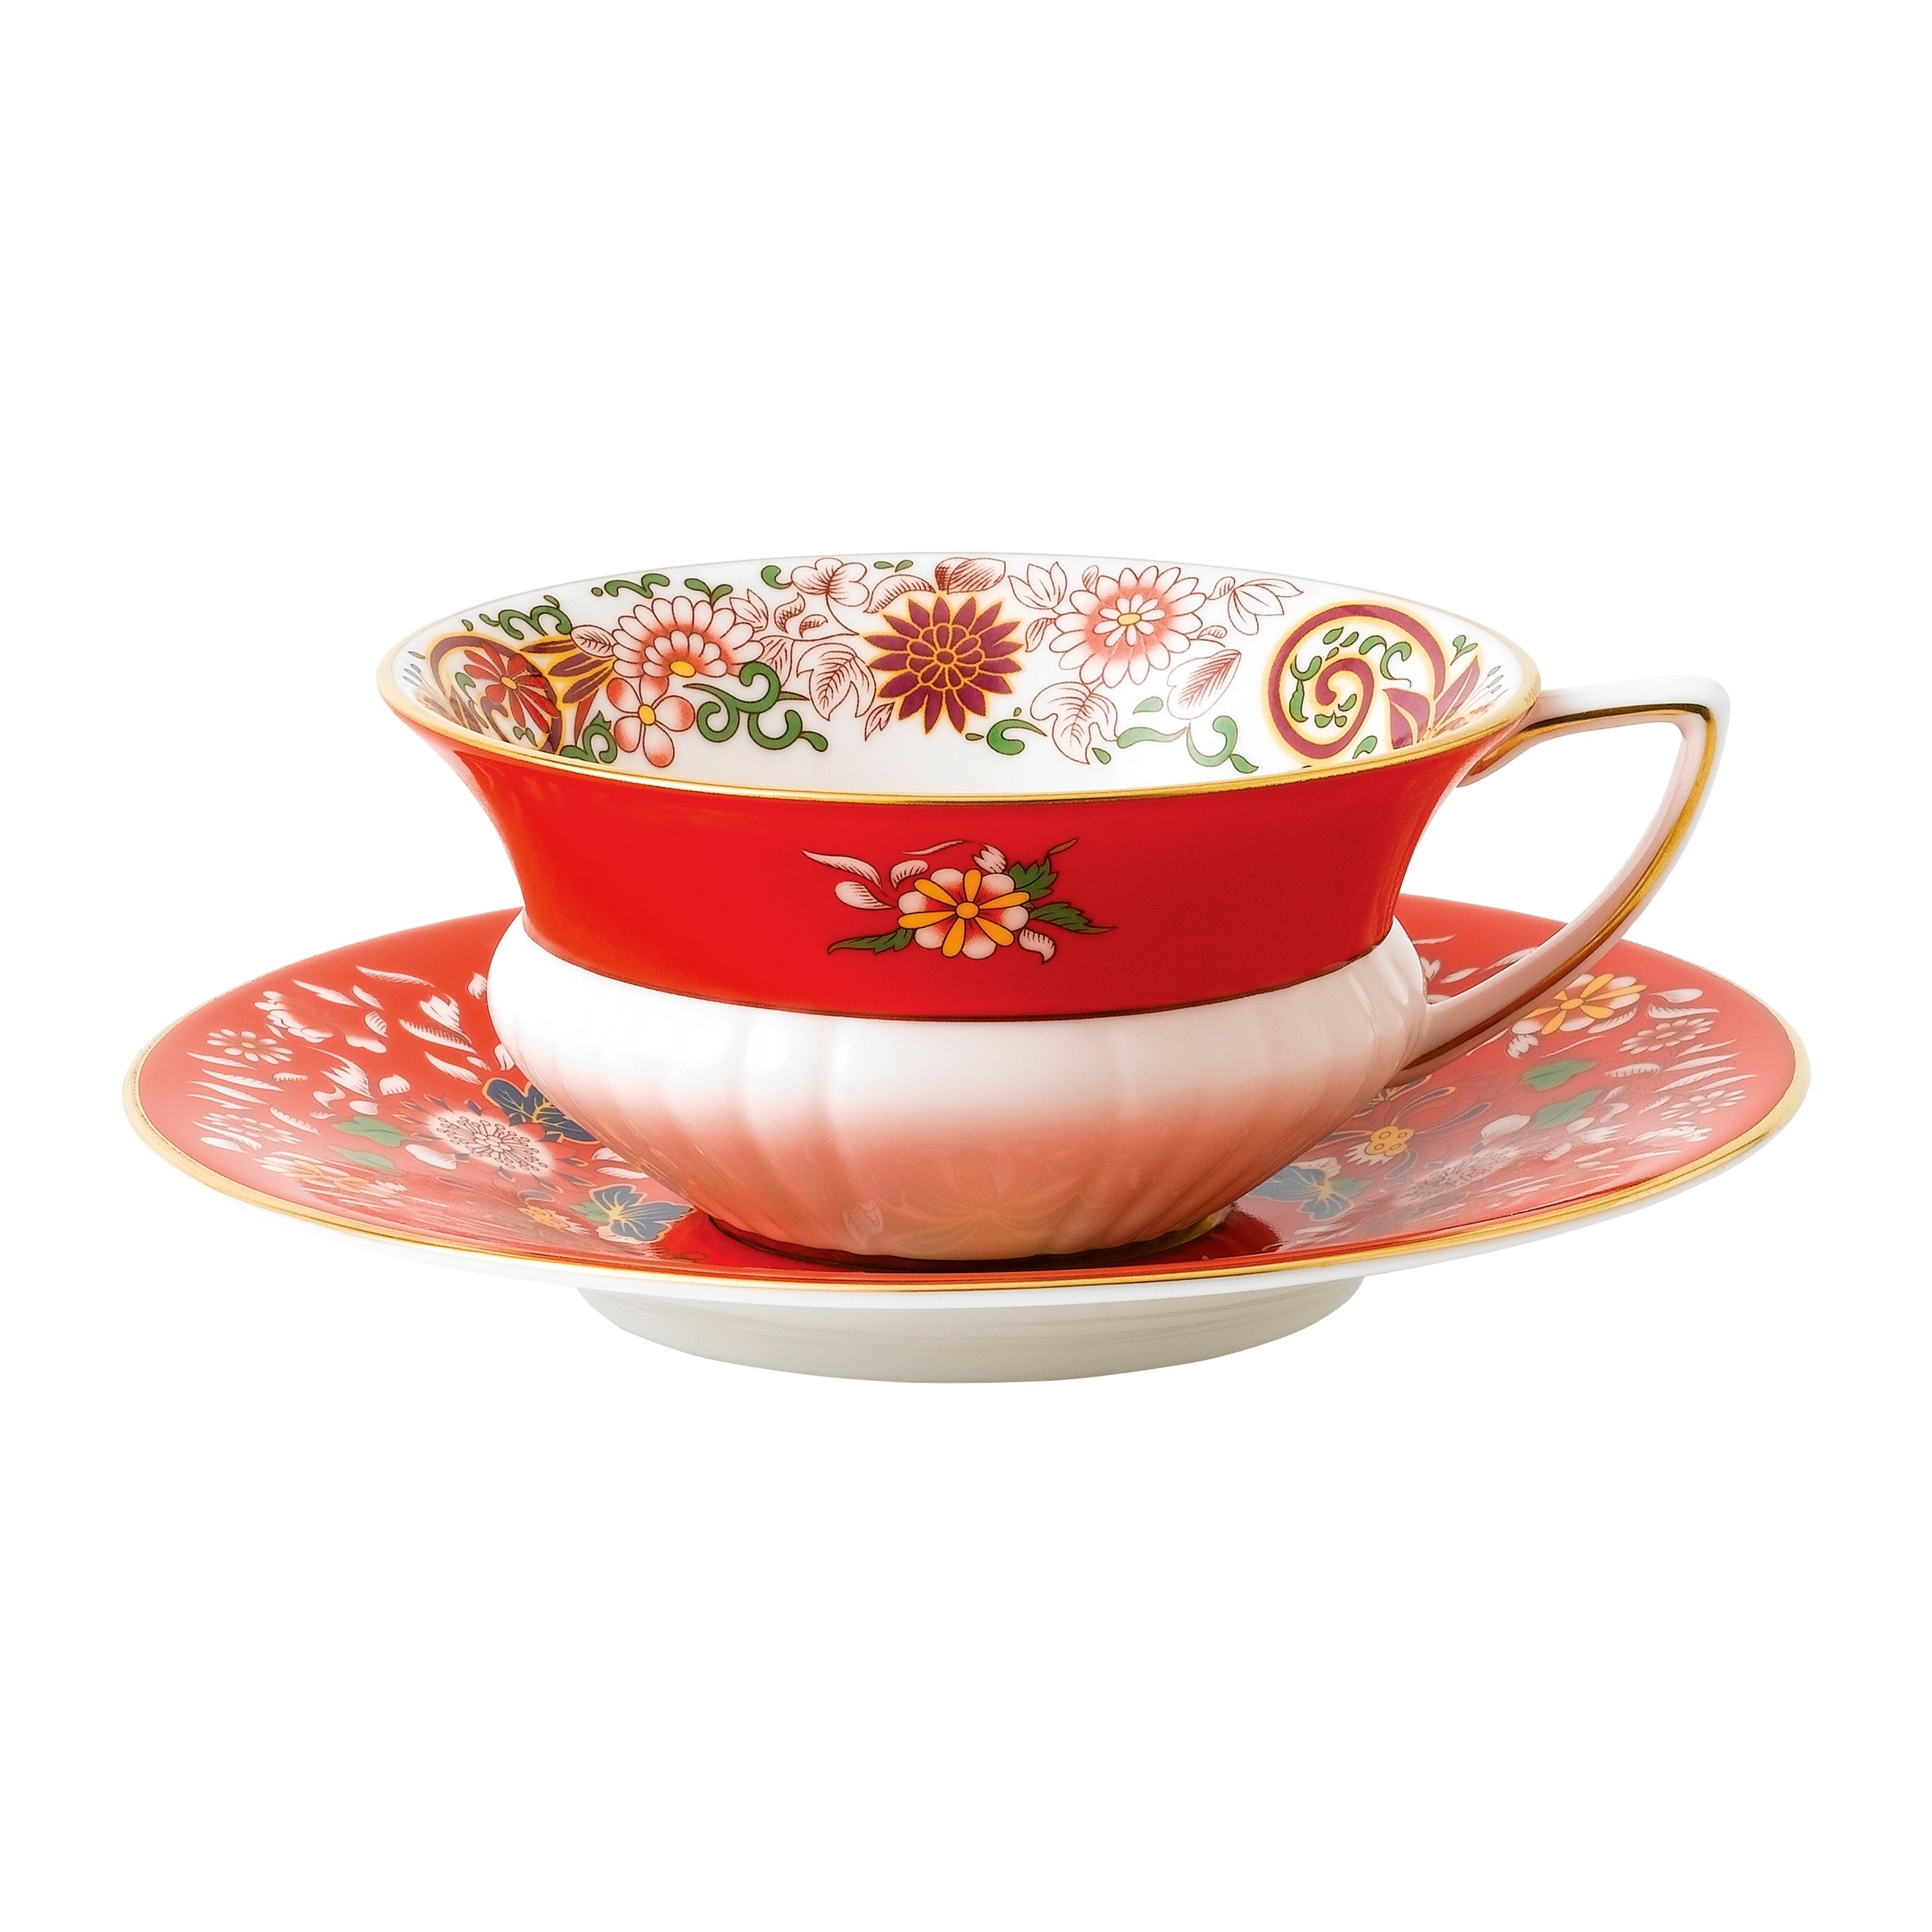 Wedgwood Wonderlust Crimson Orient Teacup and Saucer Set Bed Bath   Beyond 27322285